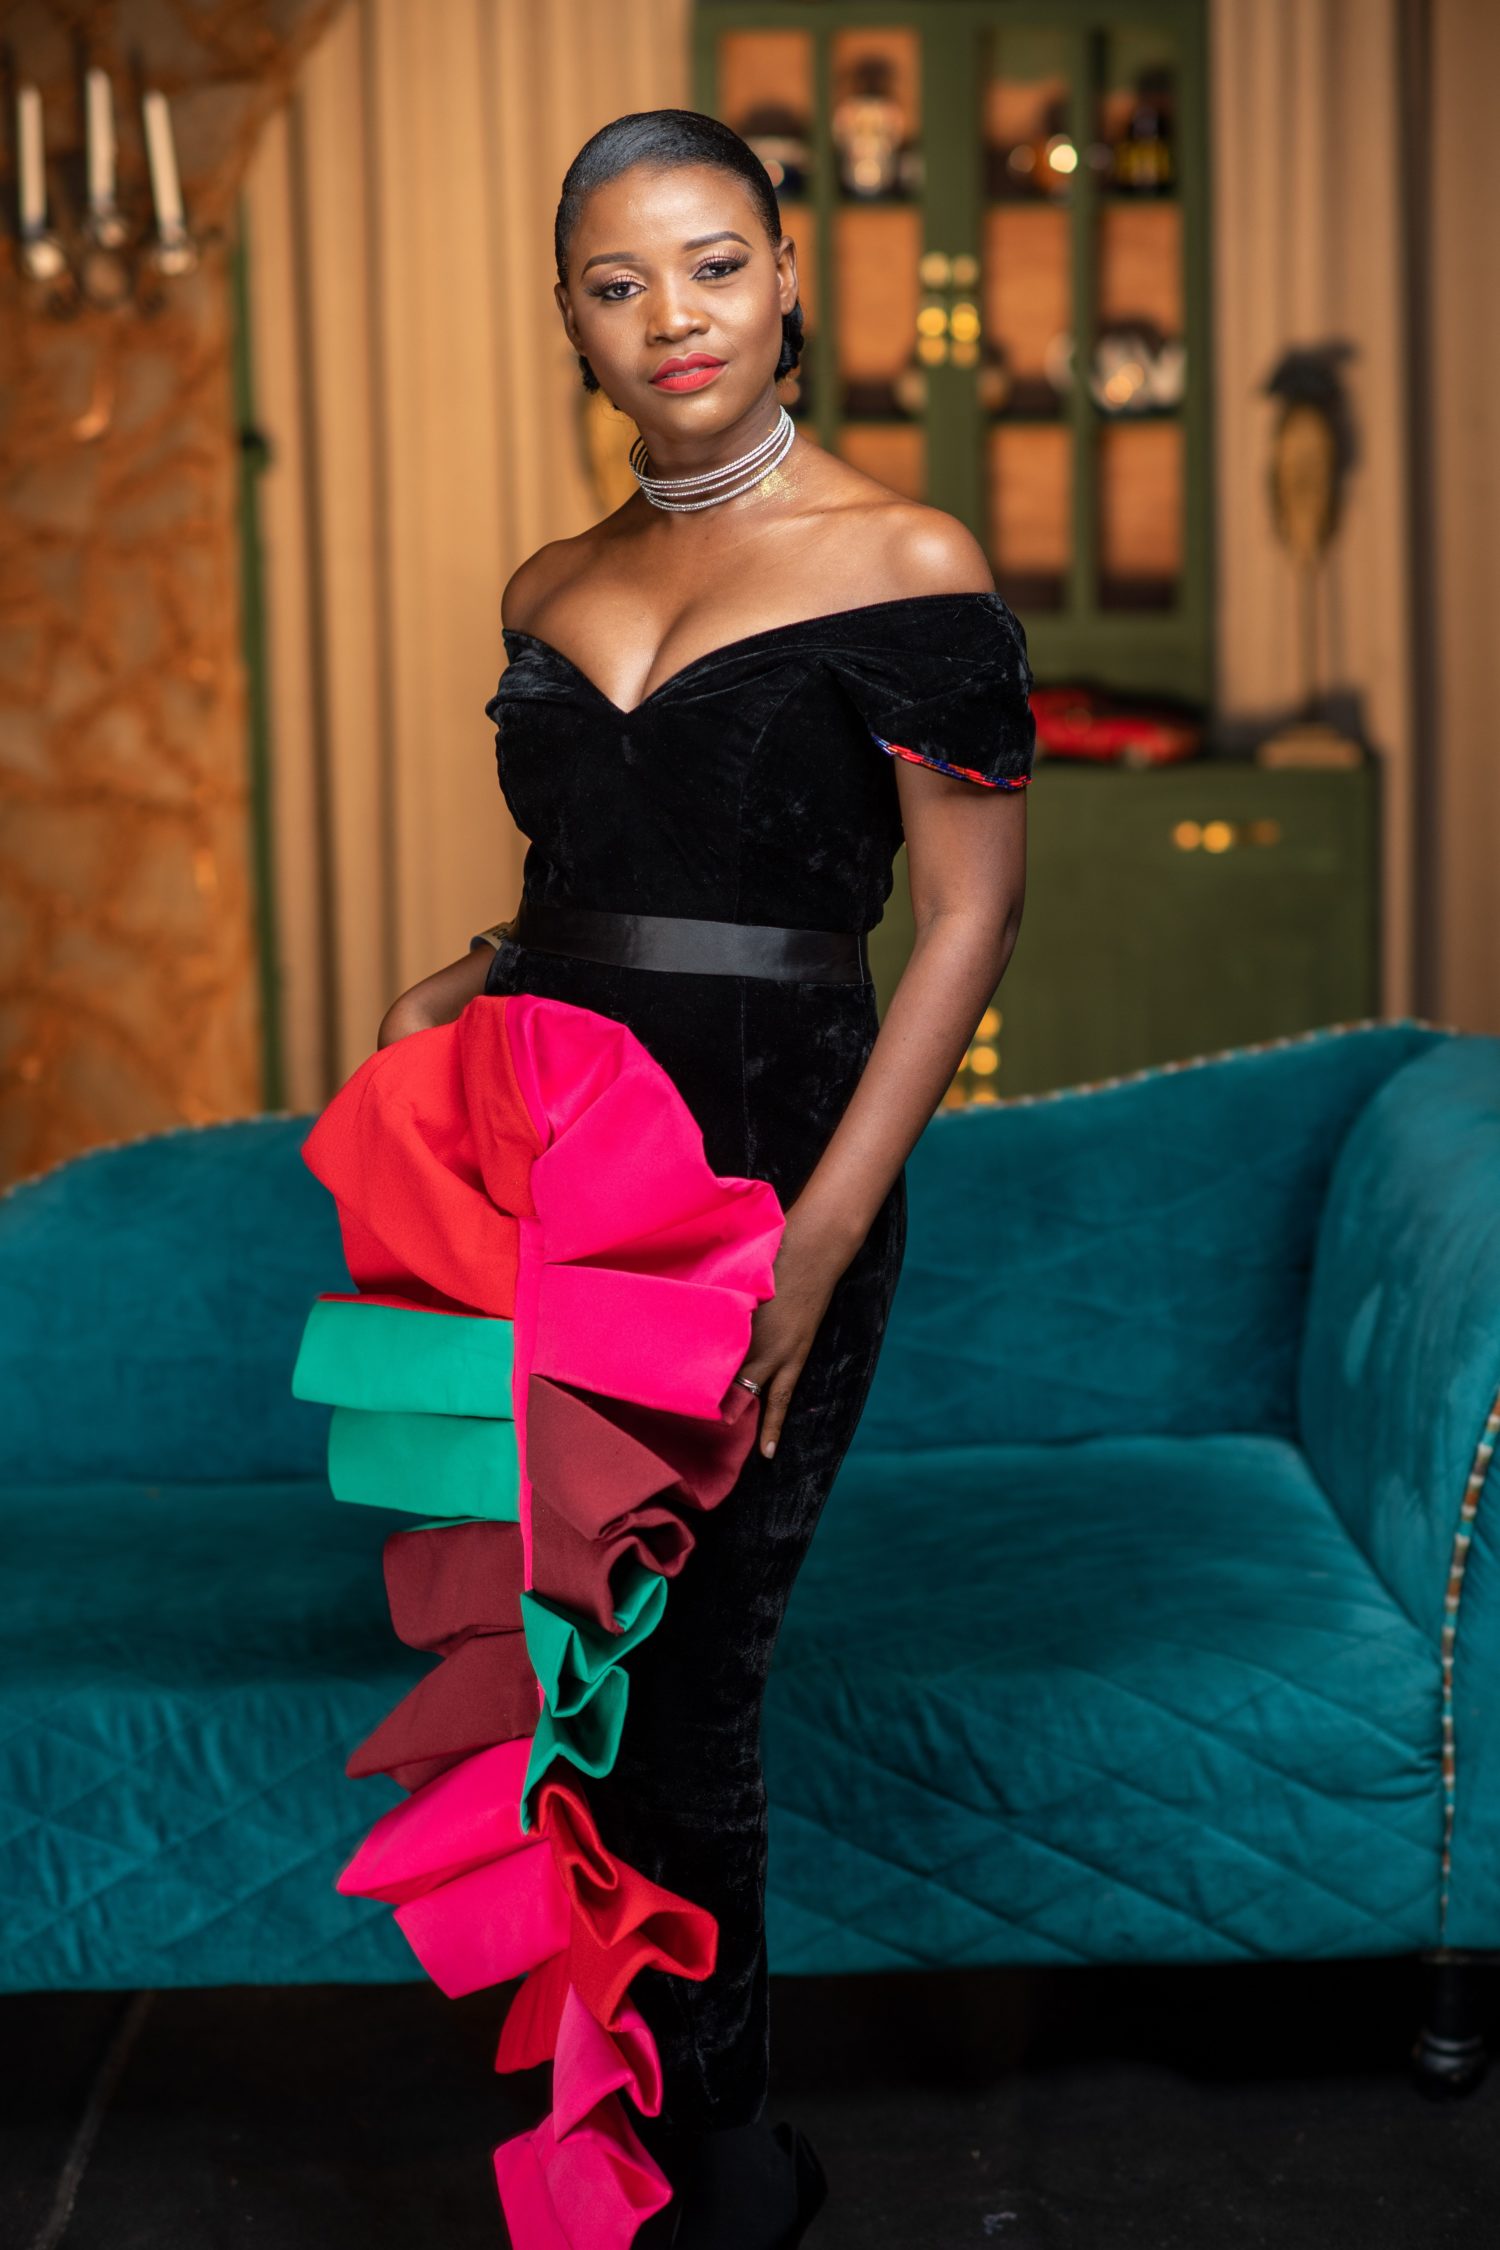 Kelechi Amadi-Obi’s Portrait Studio Captured Vintage Gatsby Glamour at the “Cold Feet” Movie Premiere